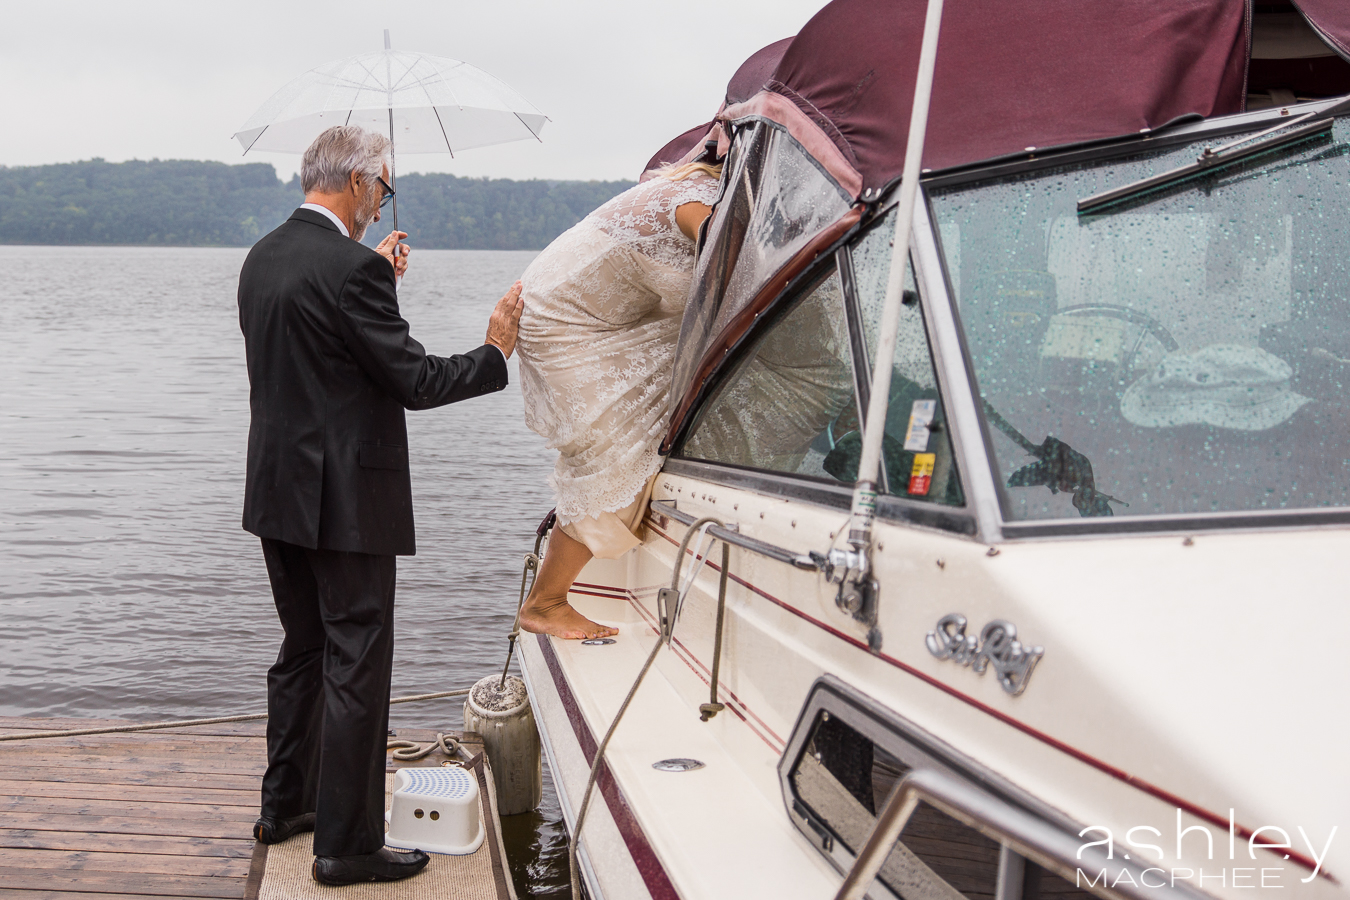 Ashley MacPhee Photography Hudson Yacht Club wedding photographer (31 of 112).jpg